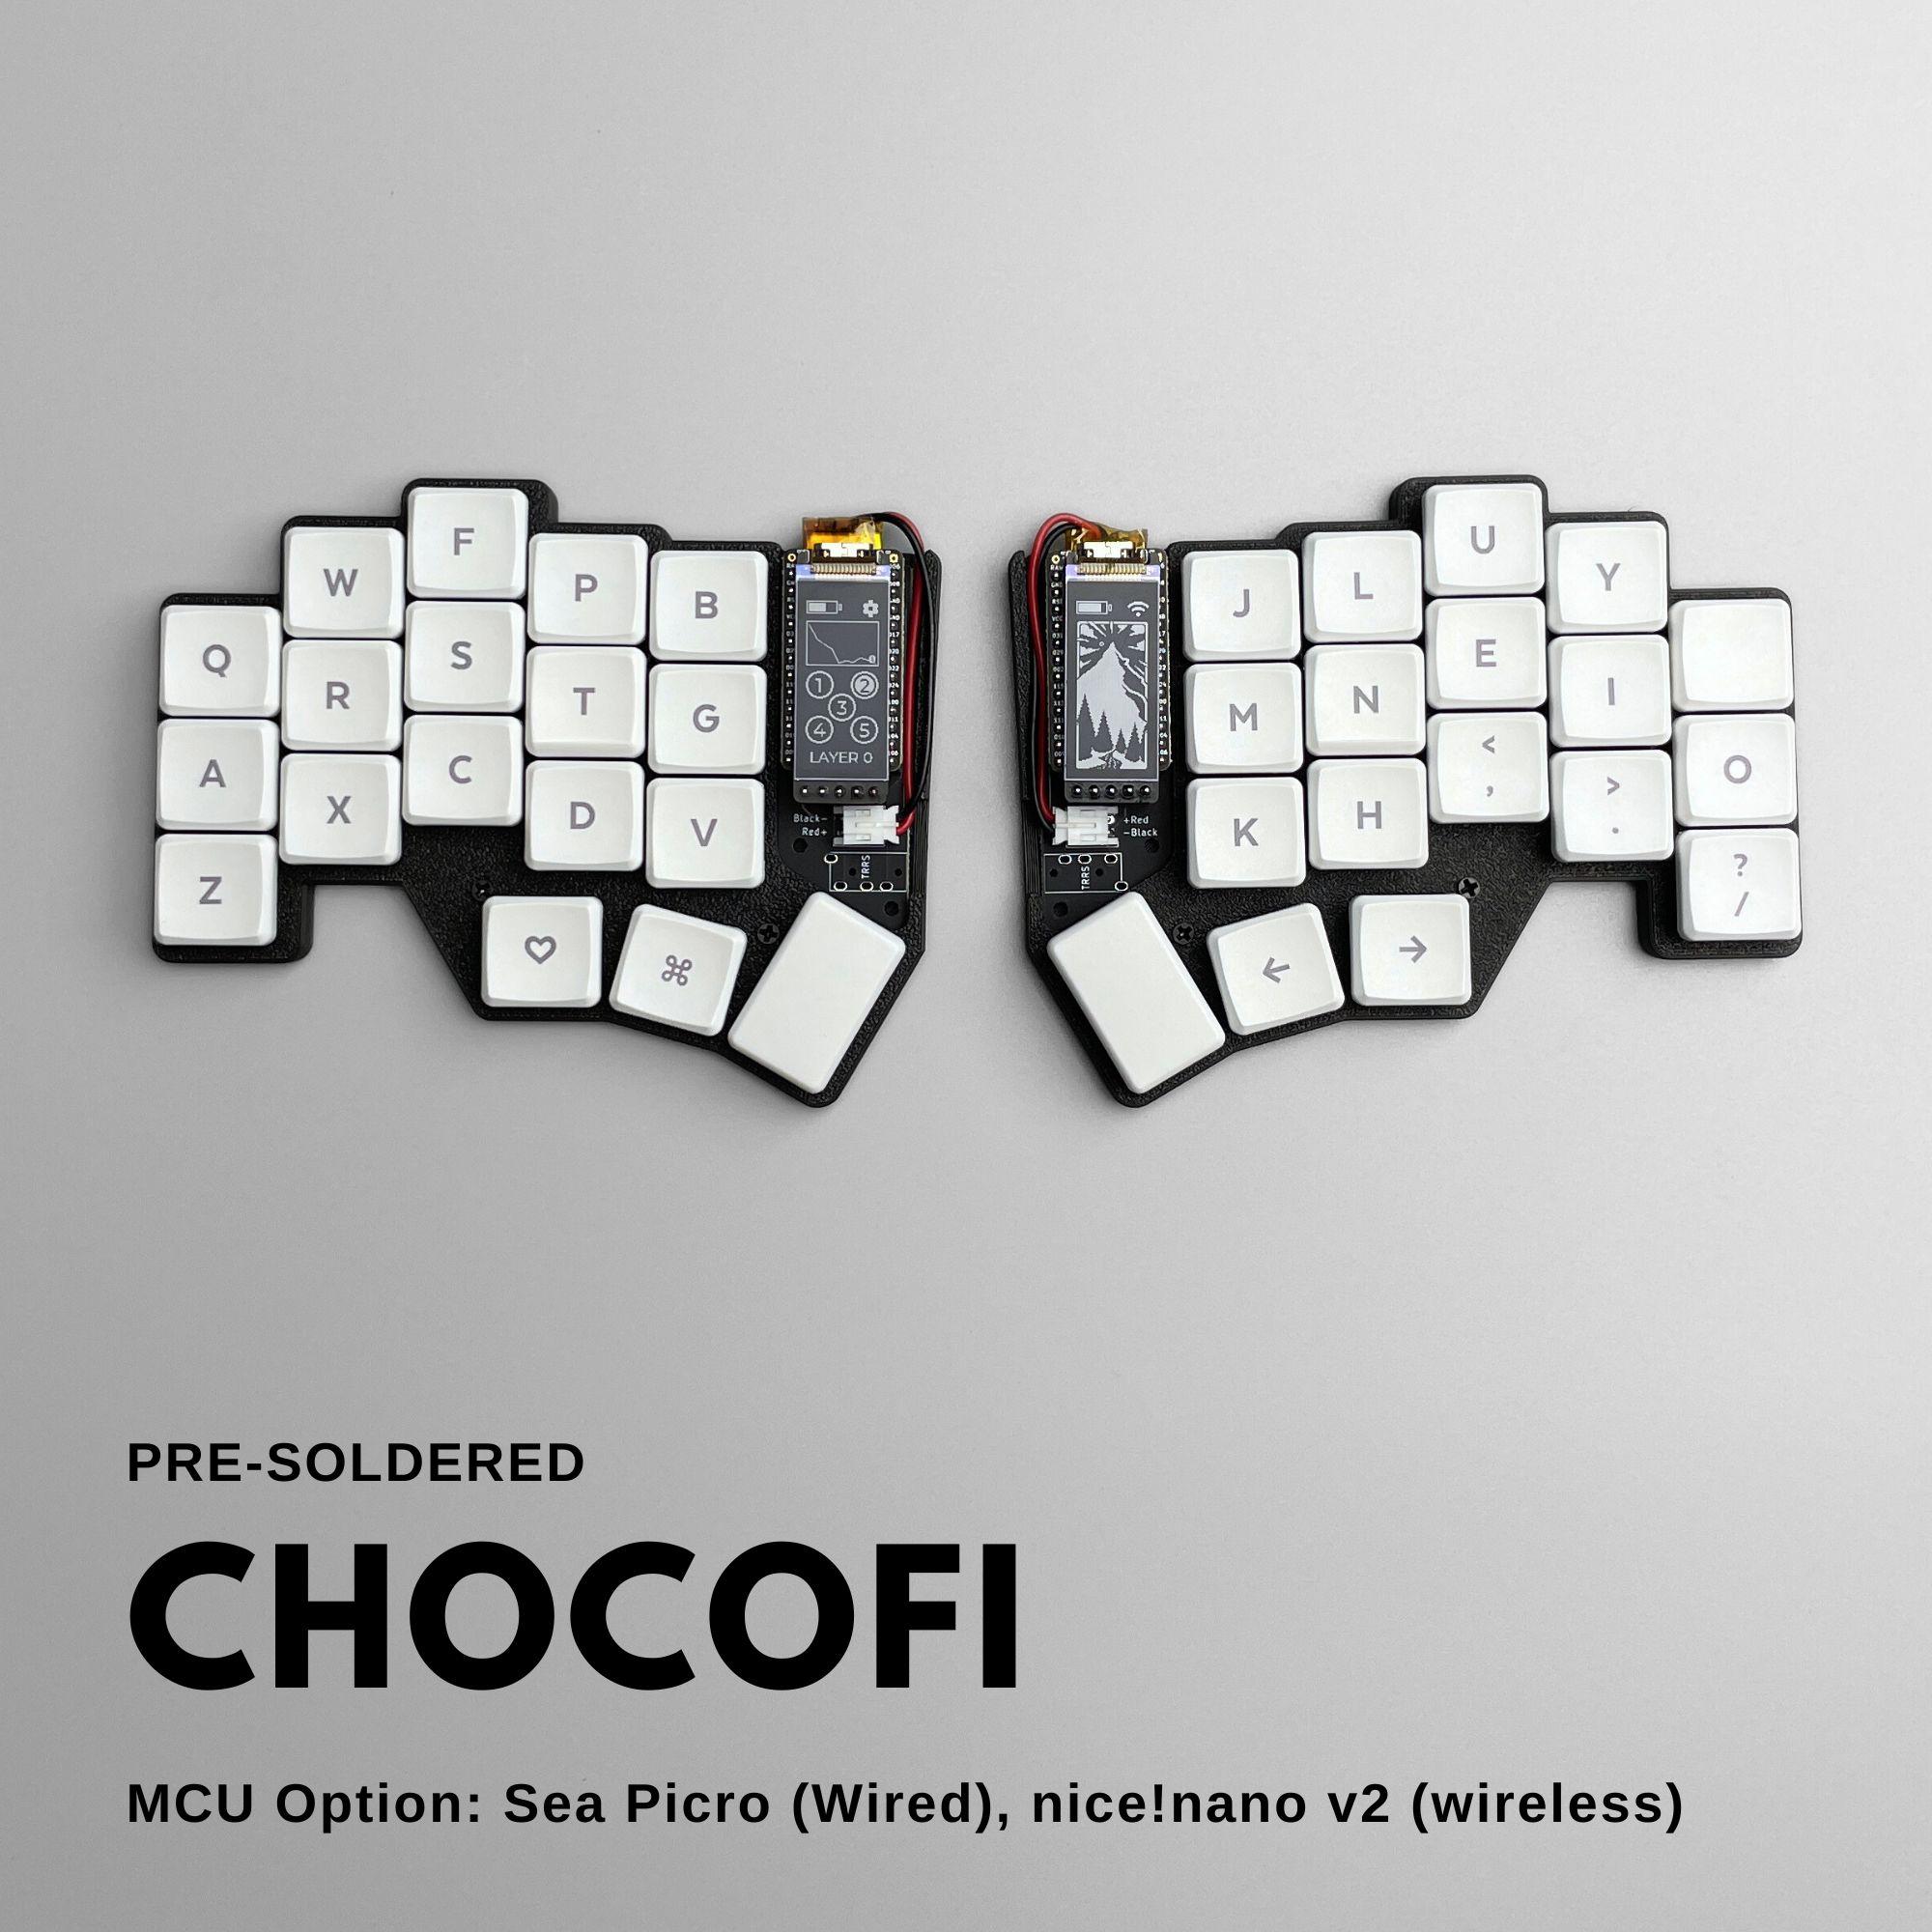 Pre-soldered Chocofi Keyboard